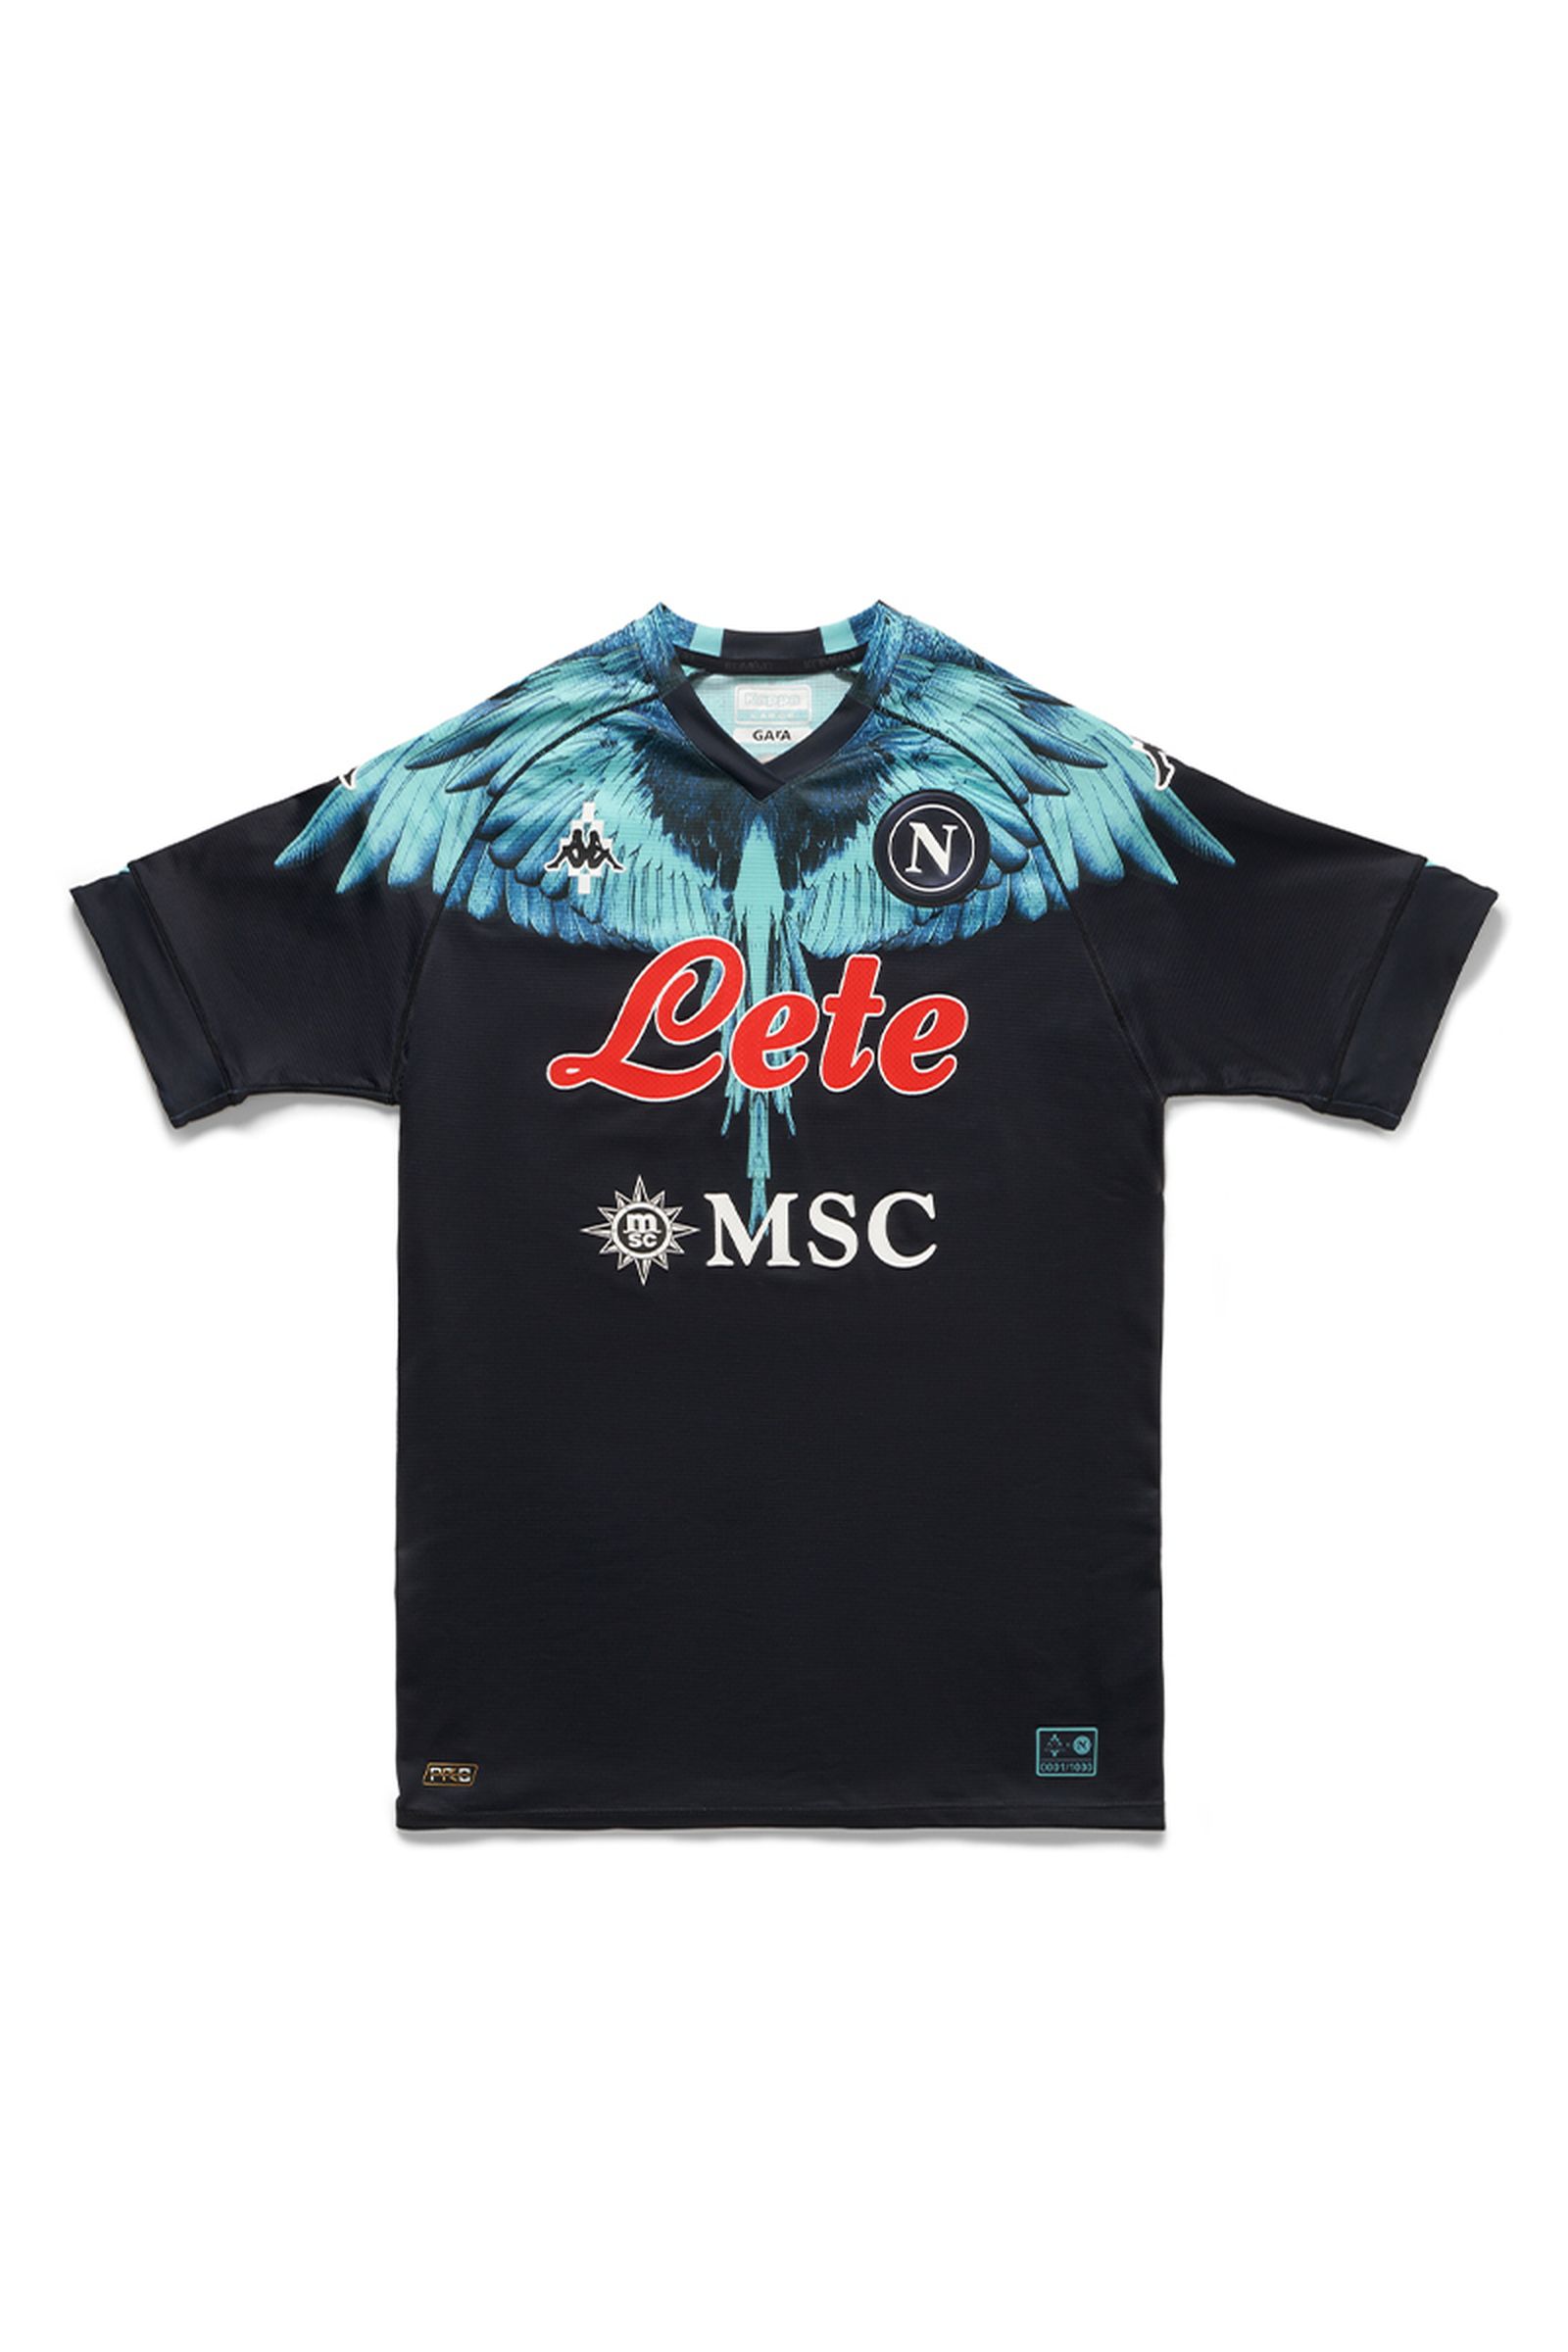 cascade Uluru nieuwigheid The Top 10 Kappa Football Shirts of All Time